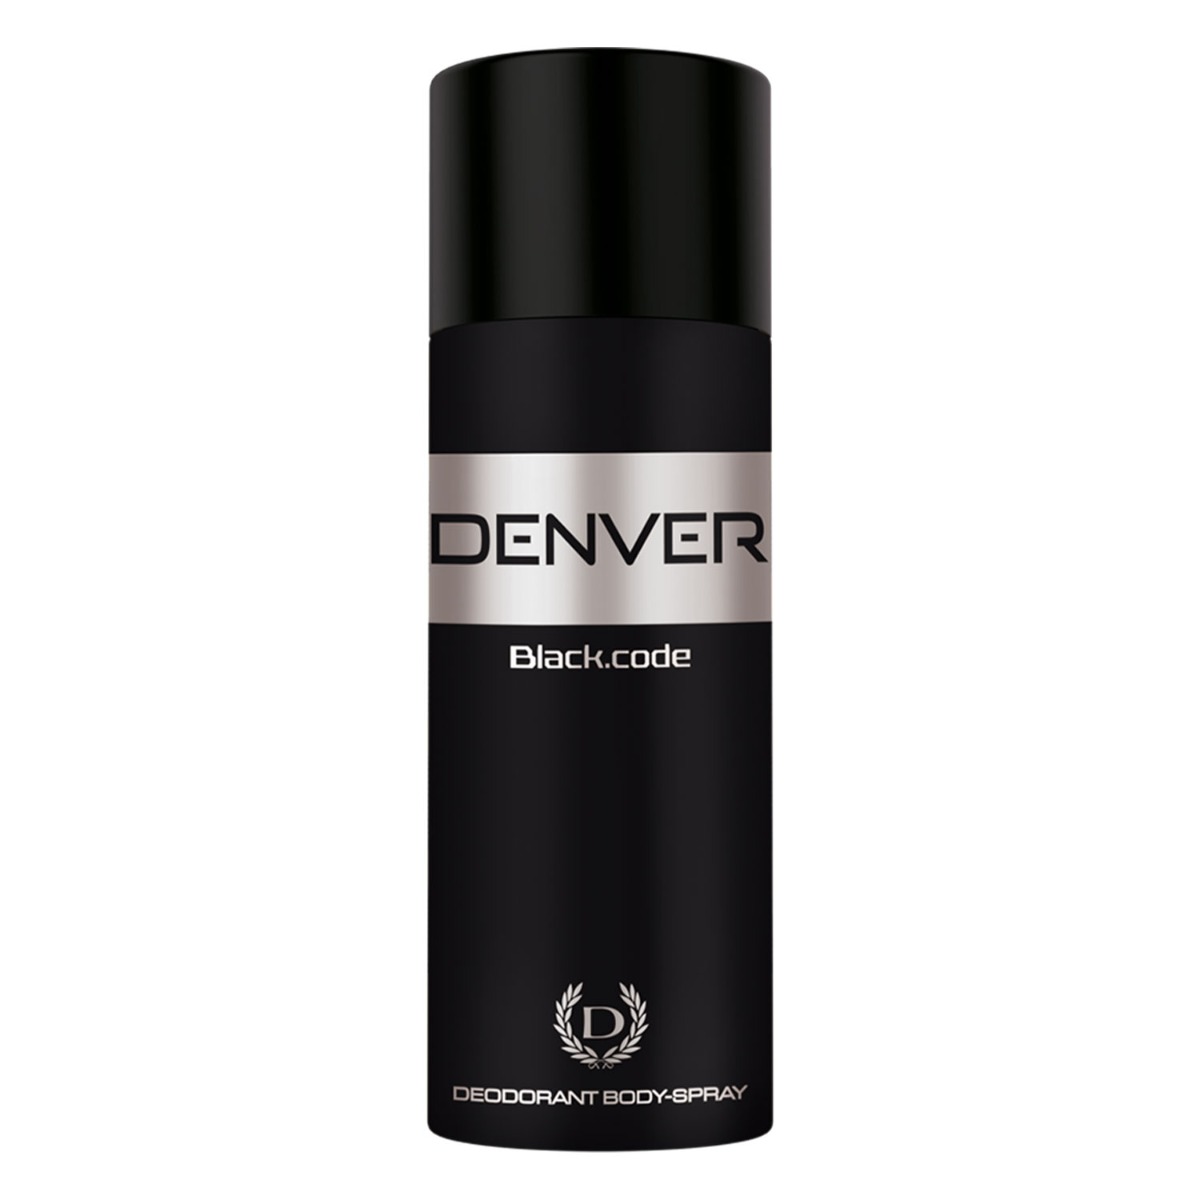 Denver Black Code Deodorant Body Spray, 150ml